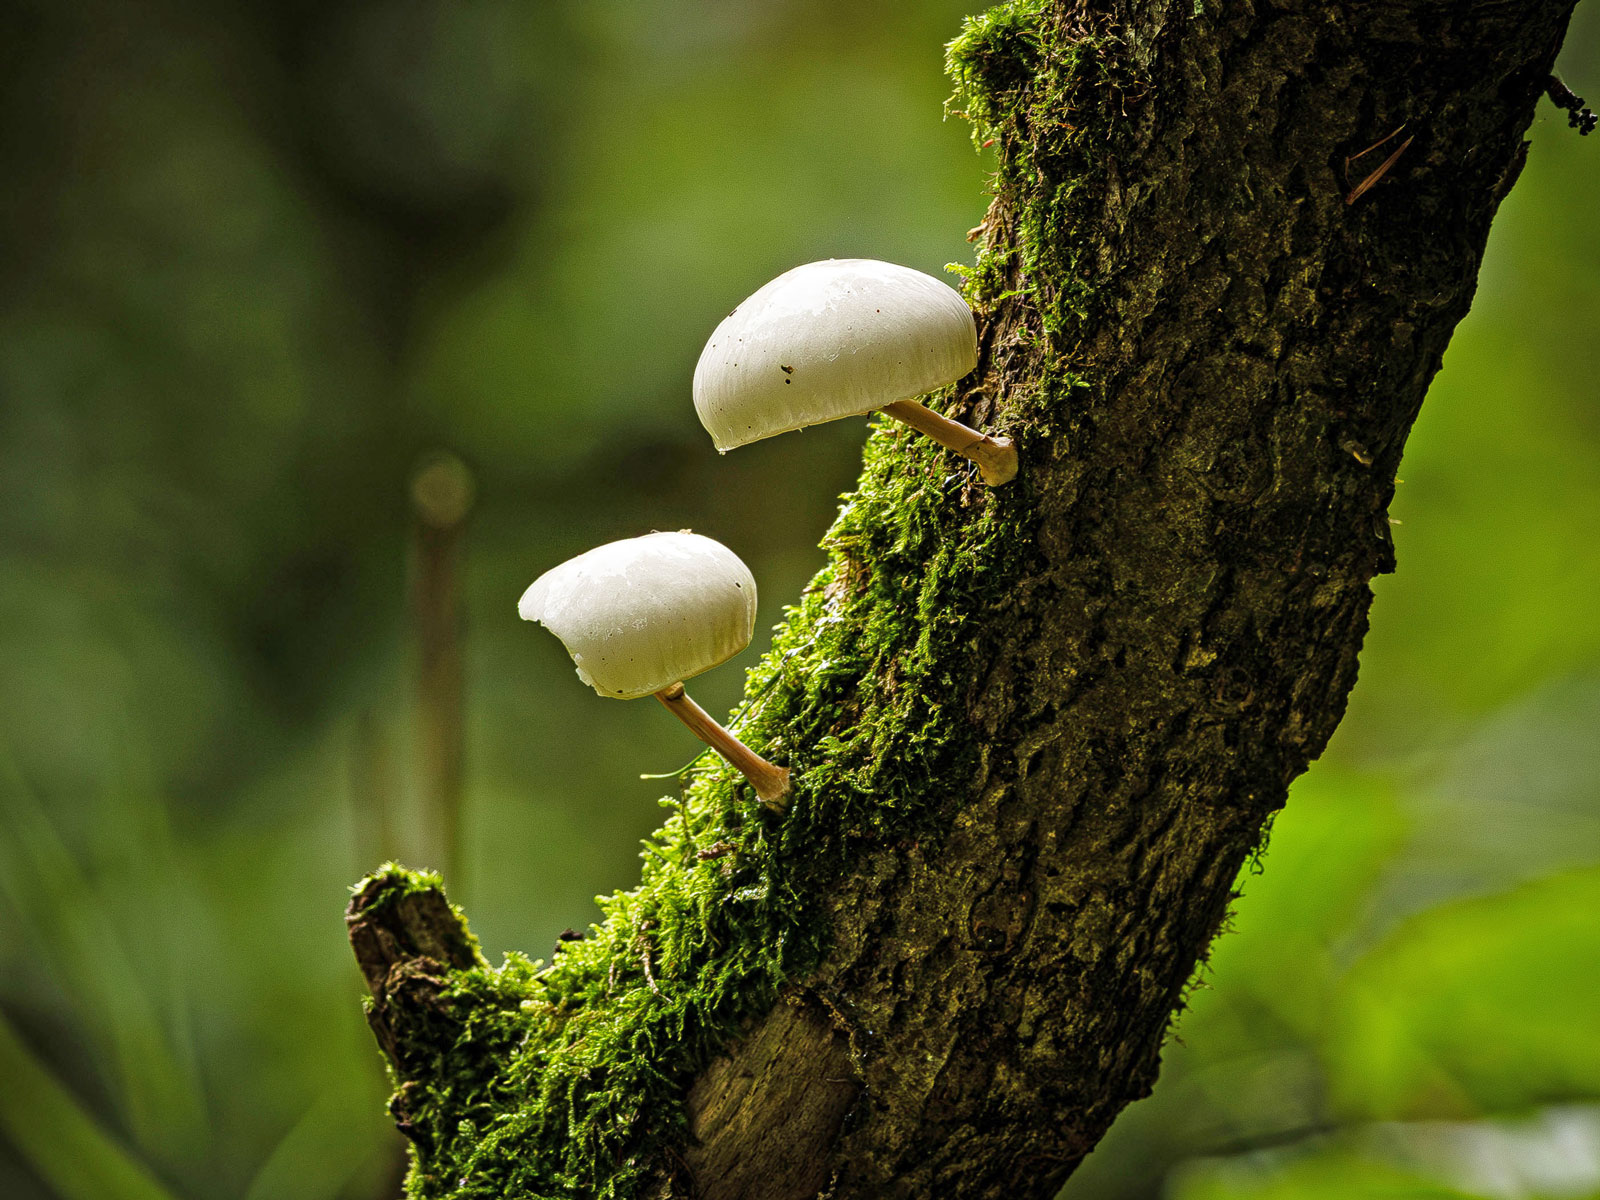 Mushrooms growing on mossy bark of a tree